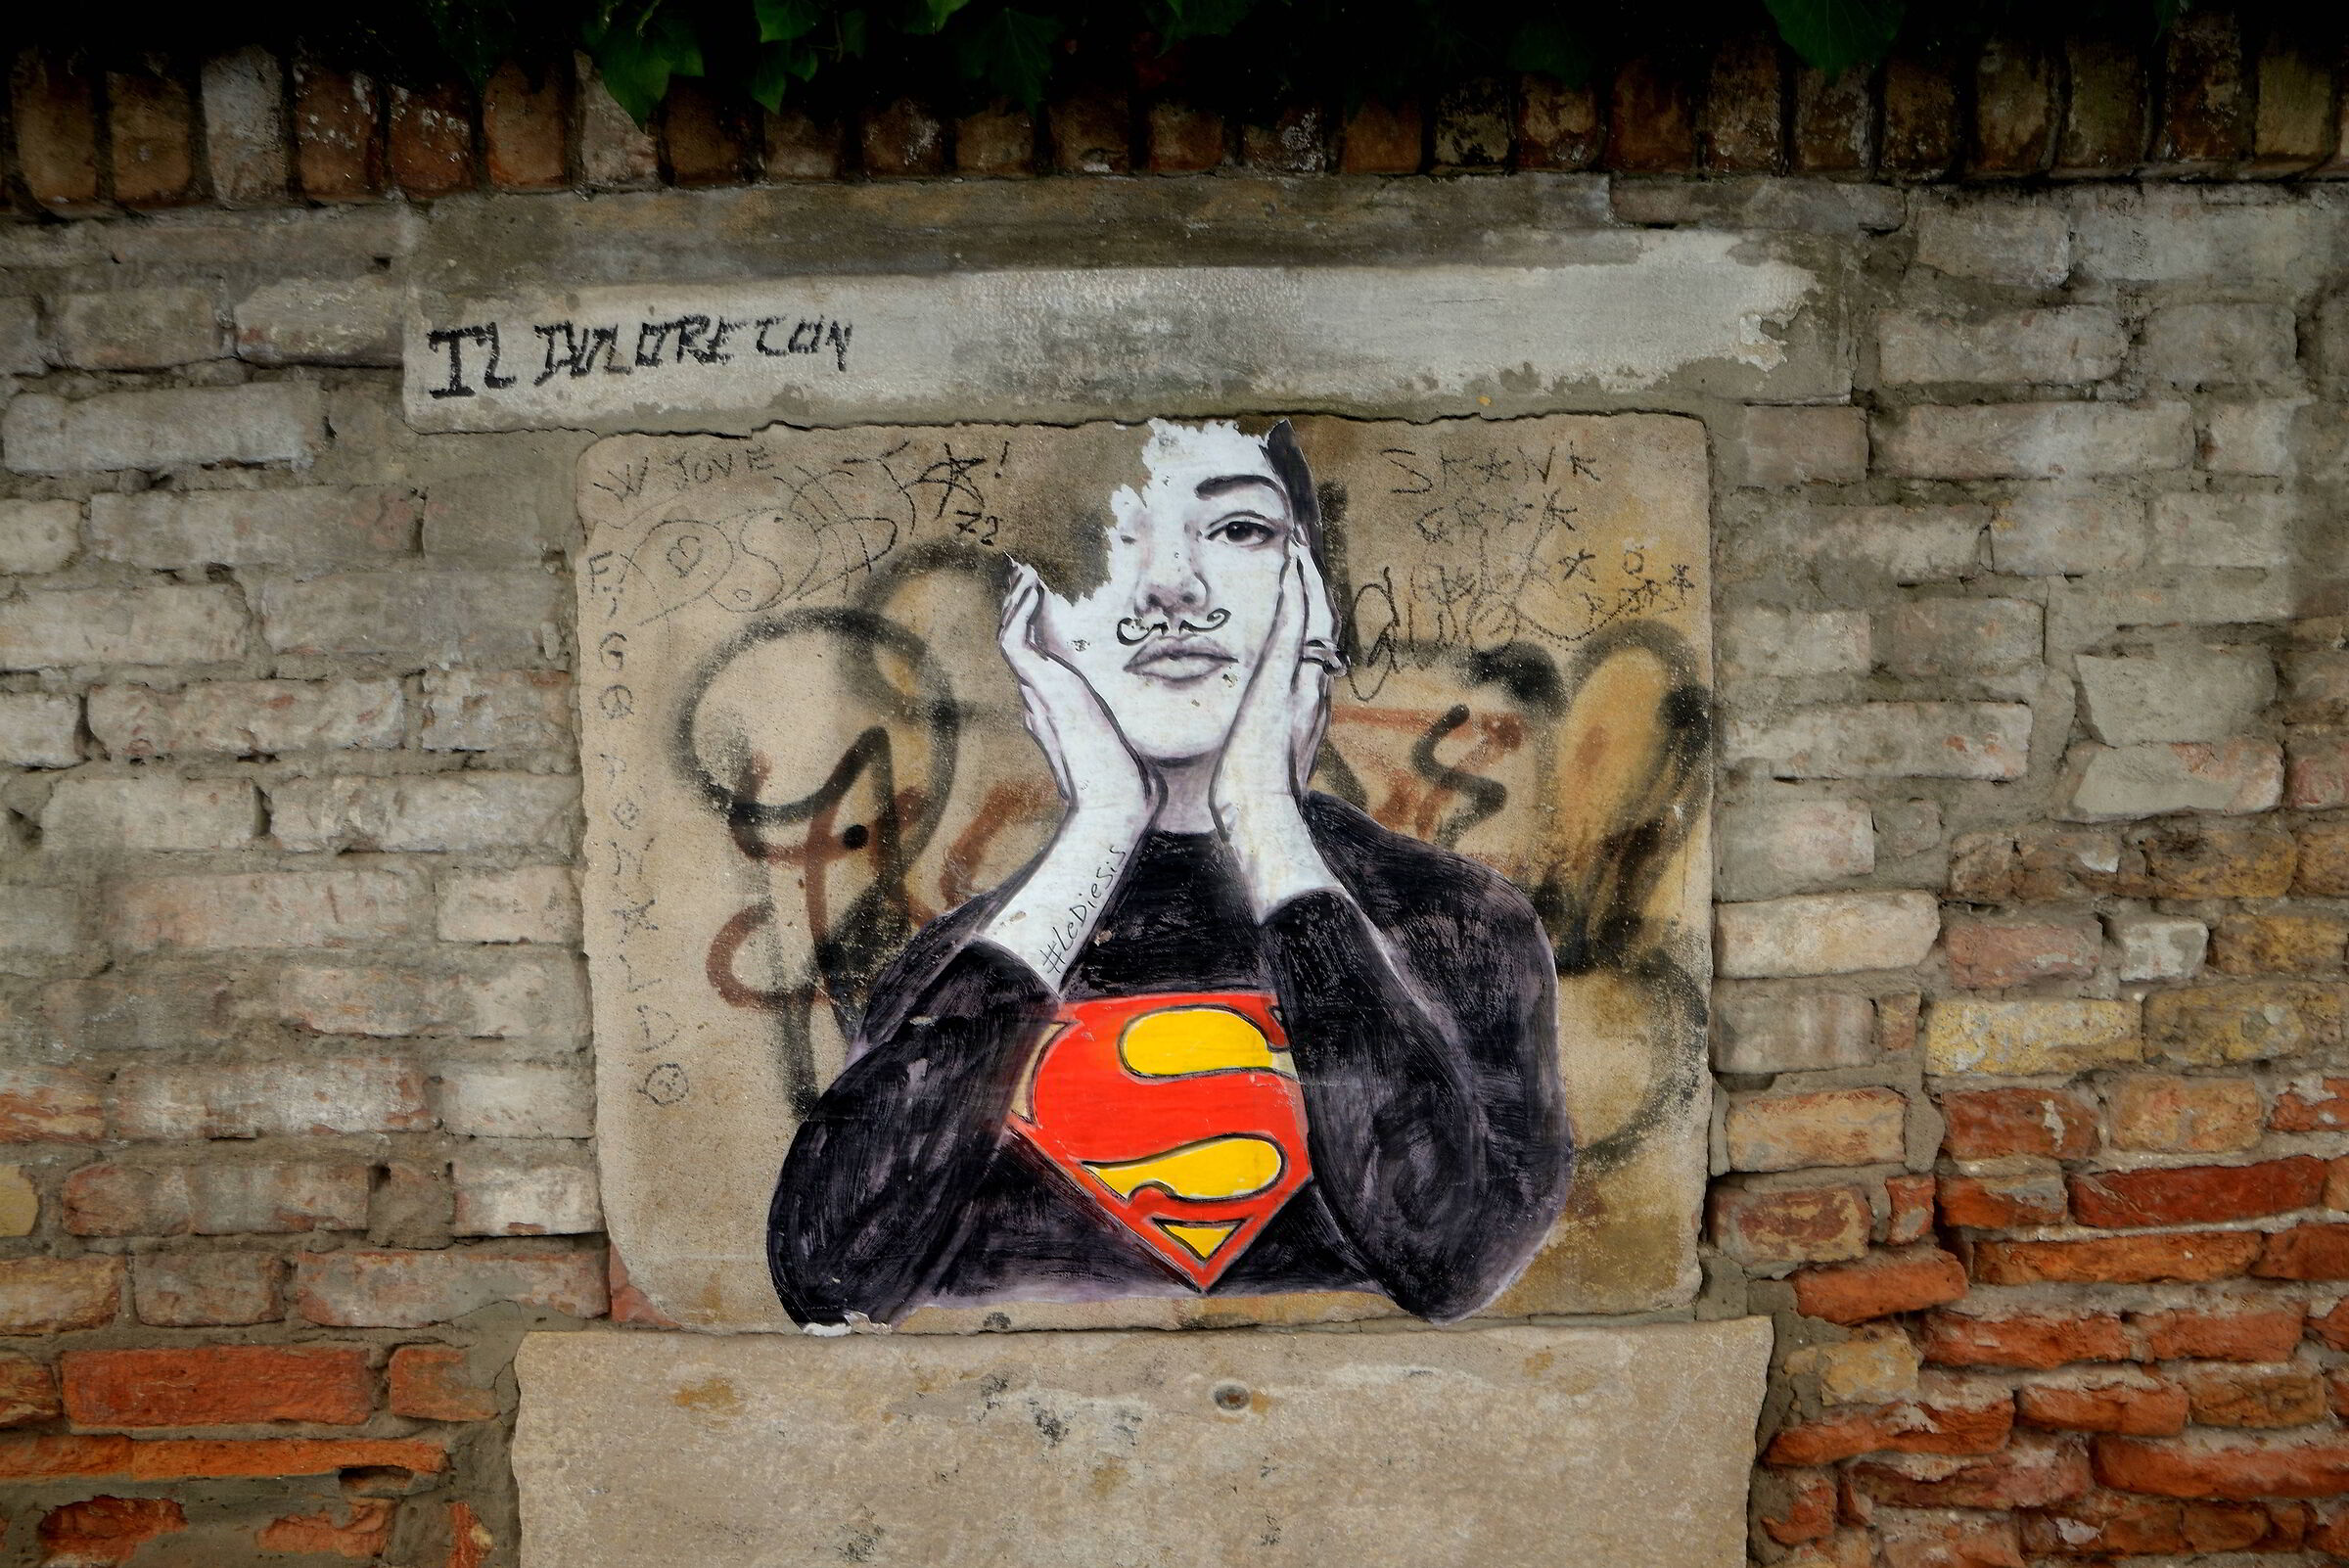 Lediesis - new trends in street art...